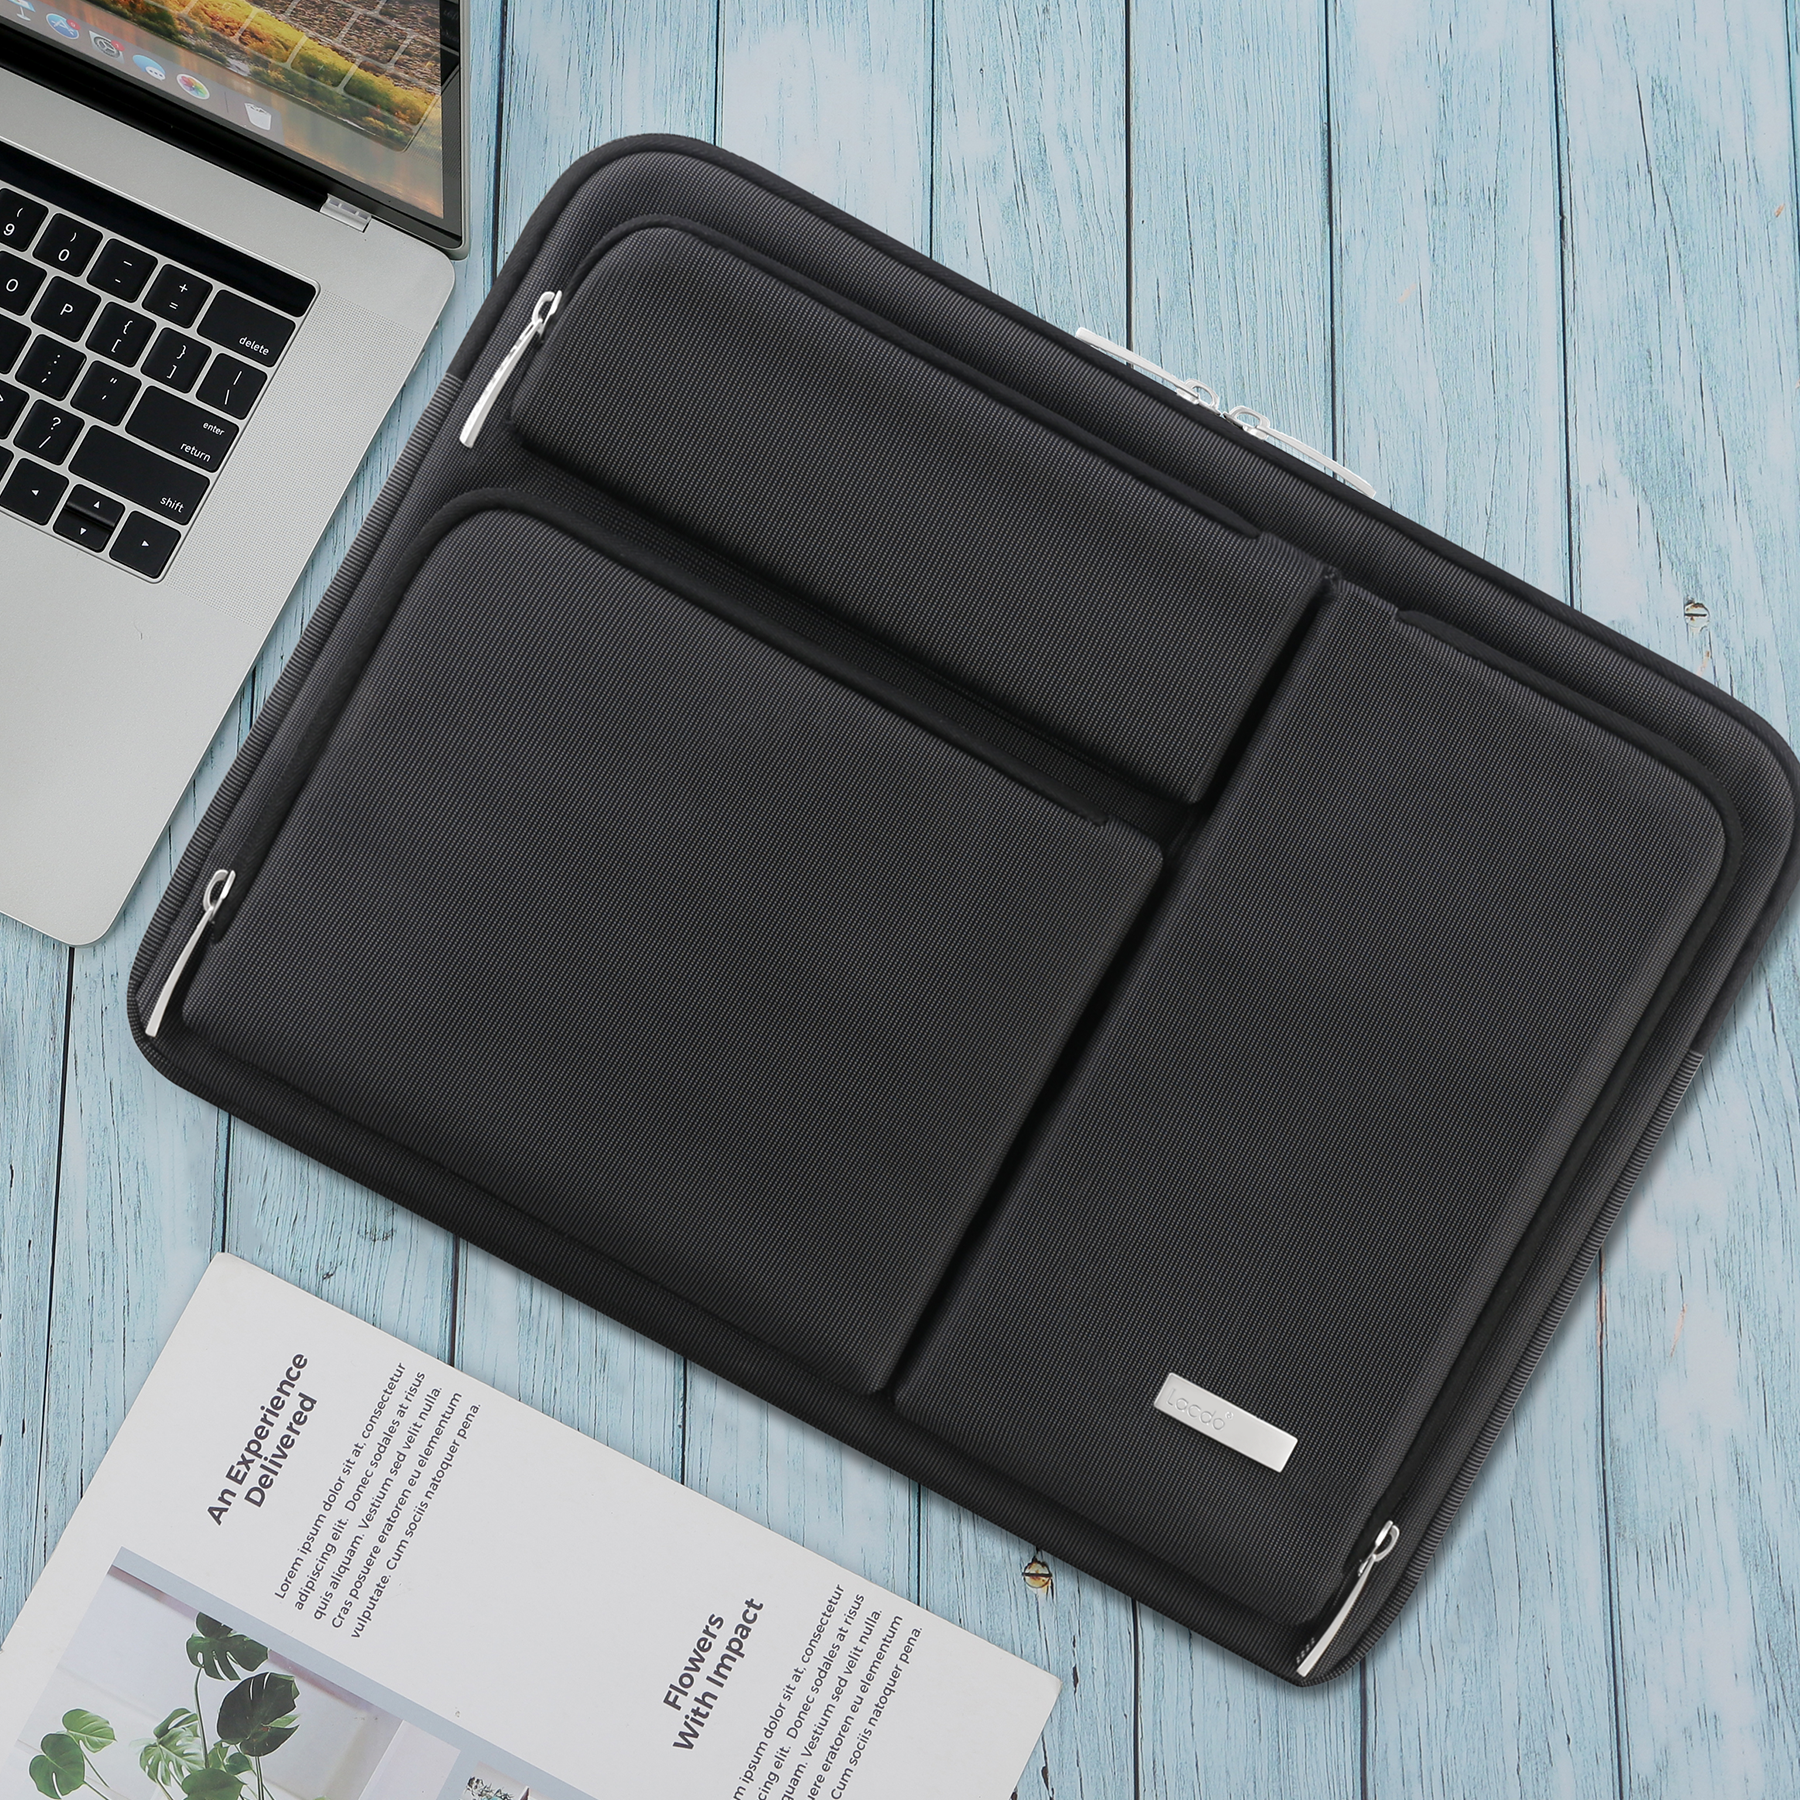 13.3 inch black macbook